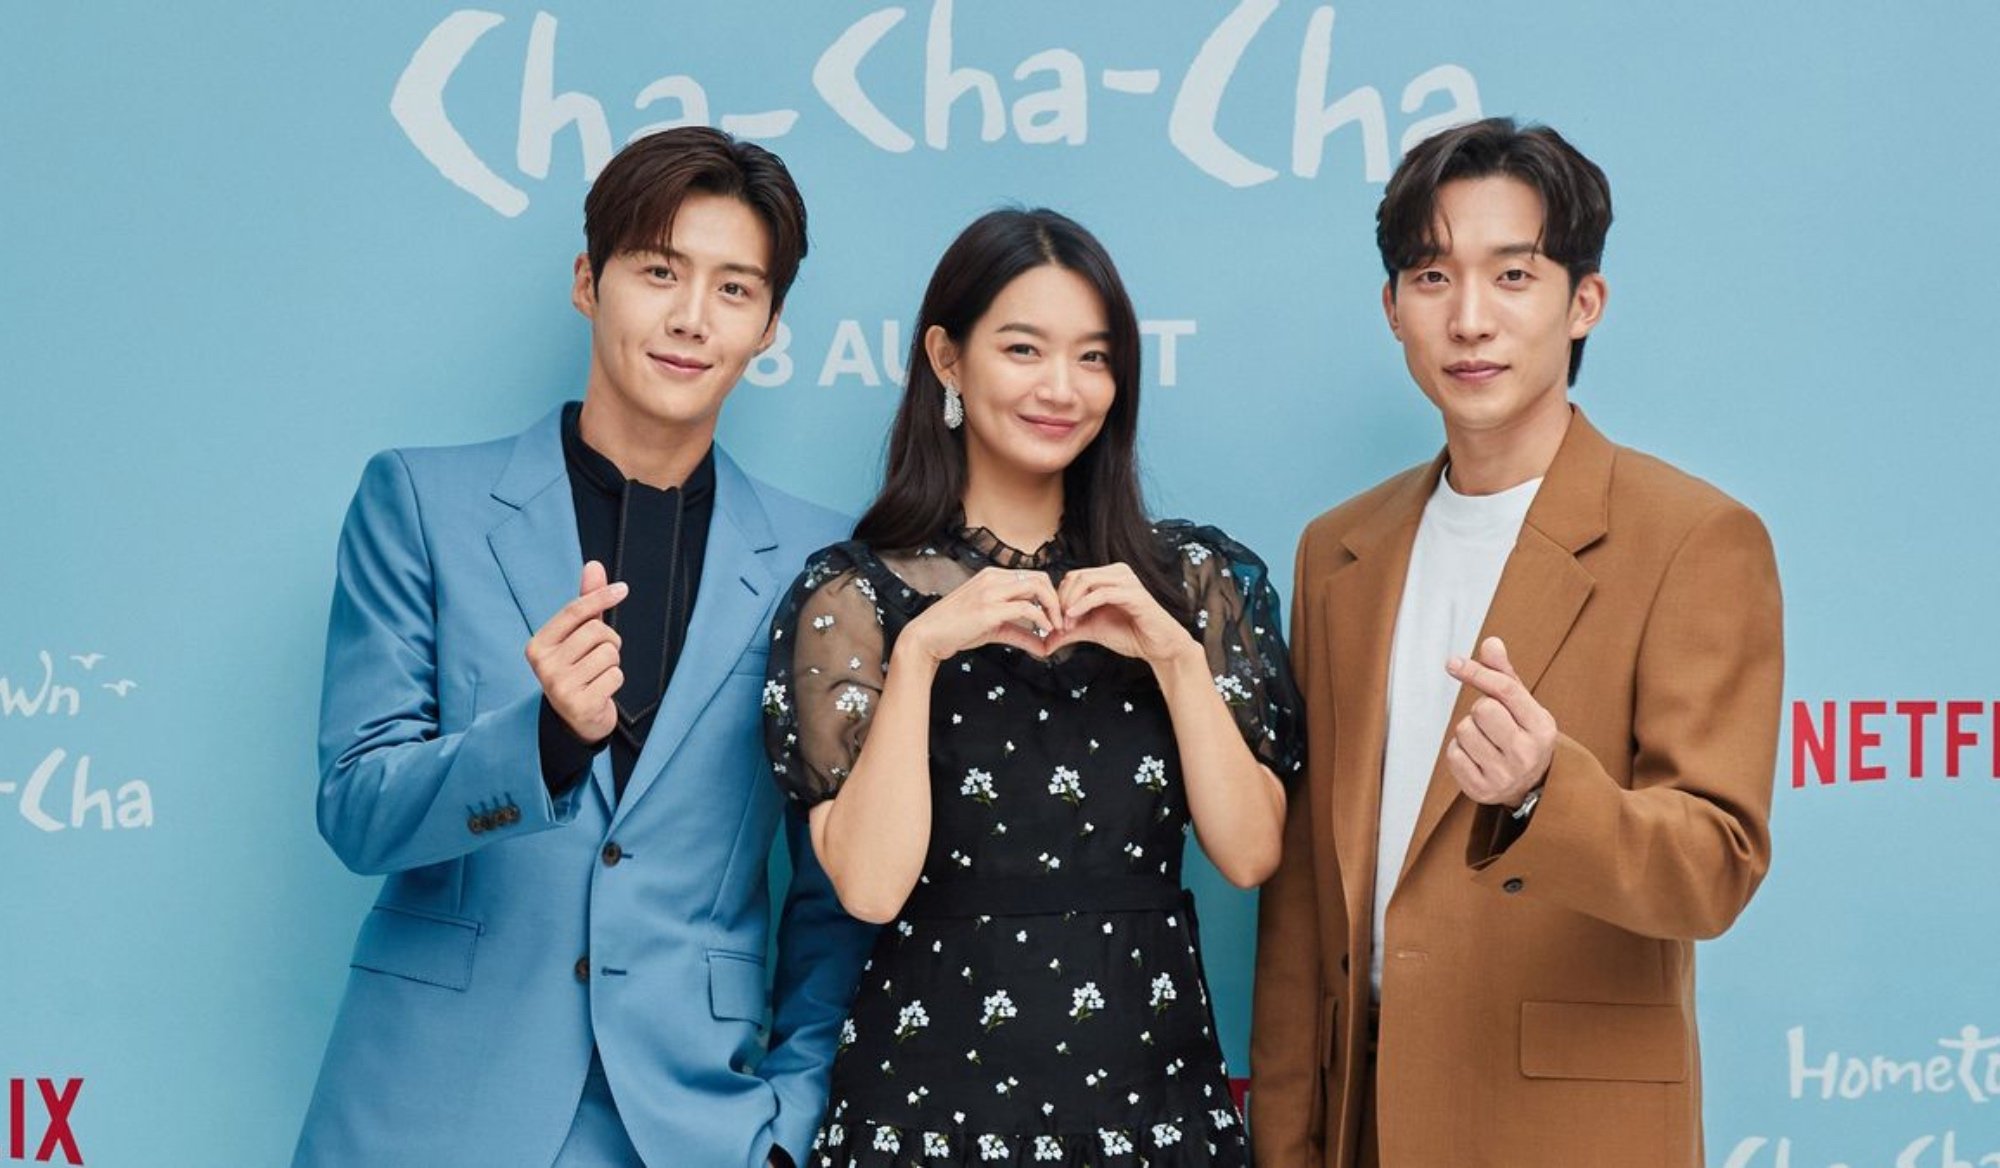 Kim-Seon-Ho, Shin-Min-A, Lee-Sang-Yi in 'Hometown-Cha-Cha-Cha' Netflix K-drama wearing blue and brown suit and floral dress